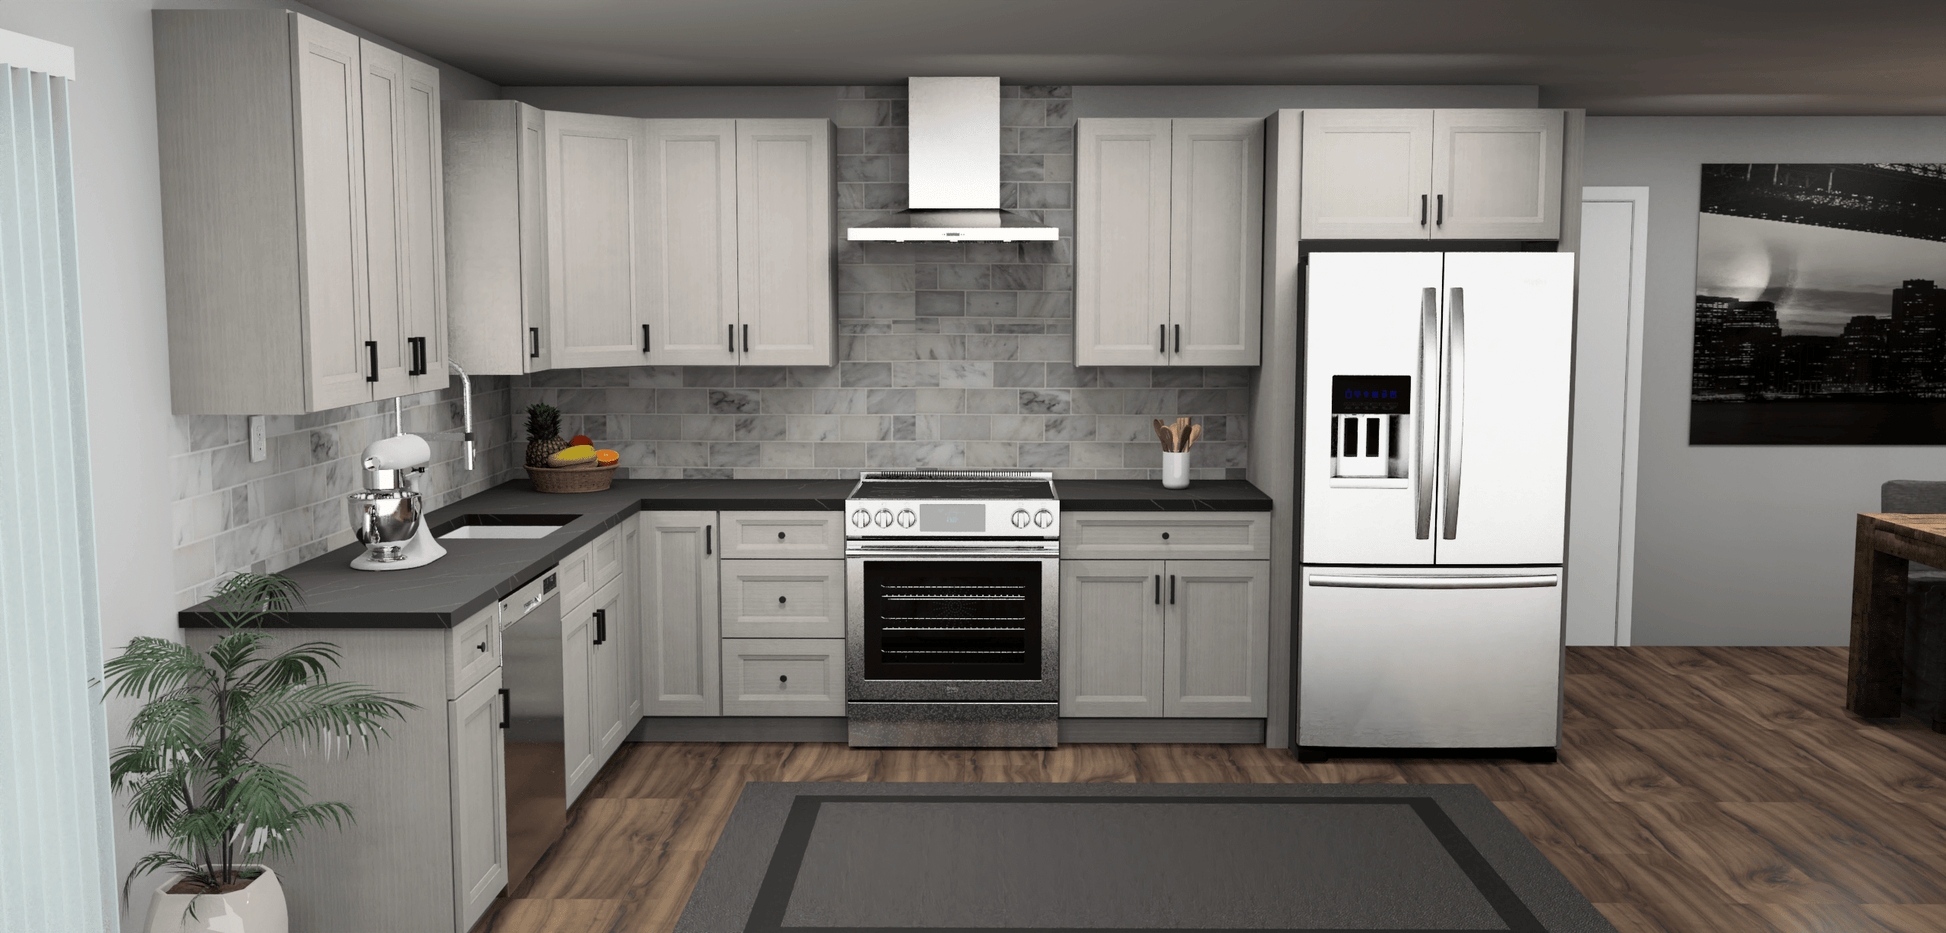 Fabuwood Allure Onyx Horizon 9 x 13 L Shaped Kitchen Front Layout Photo